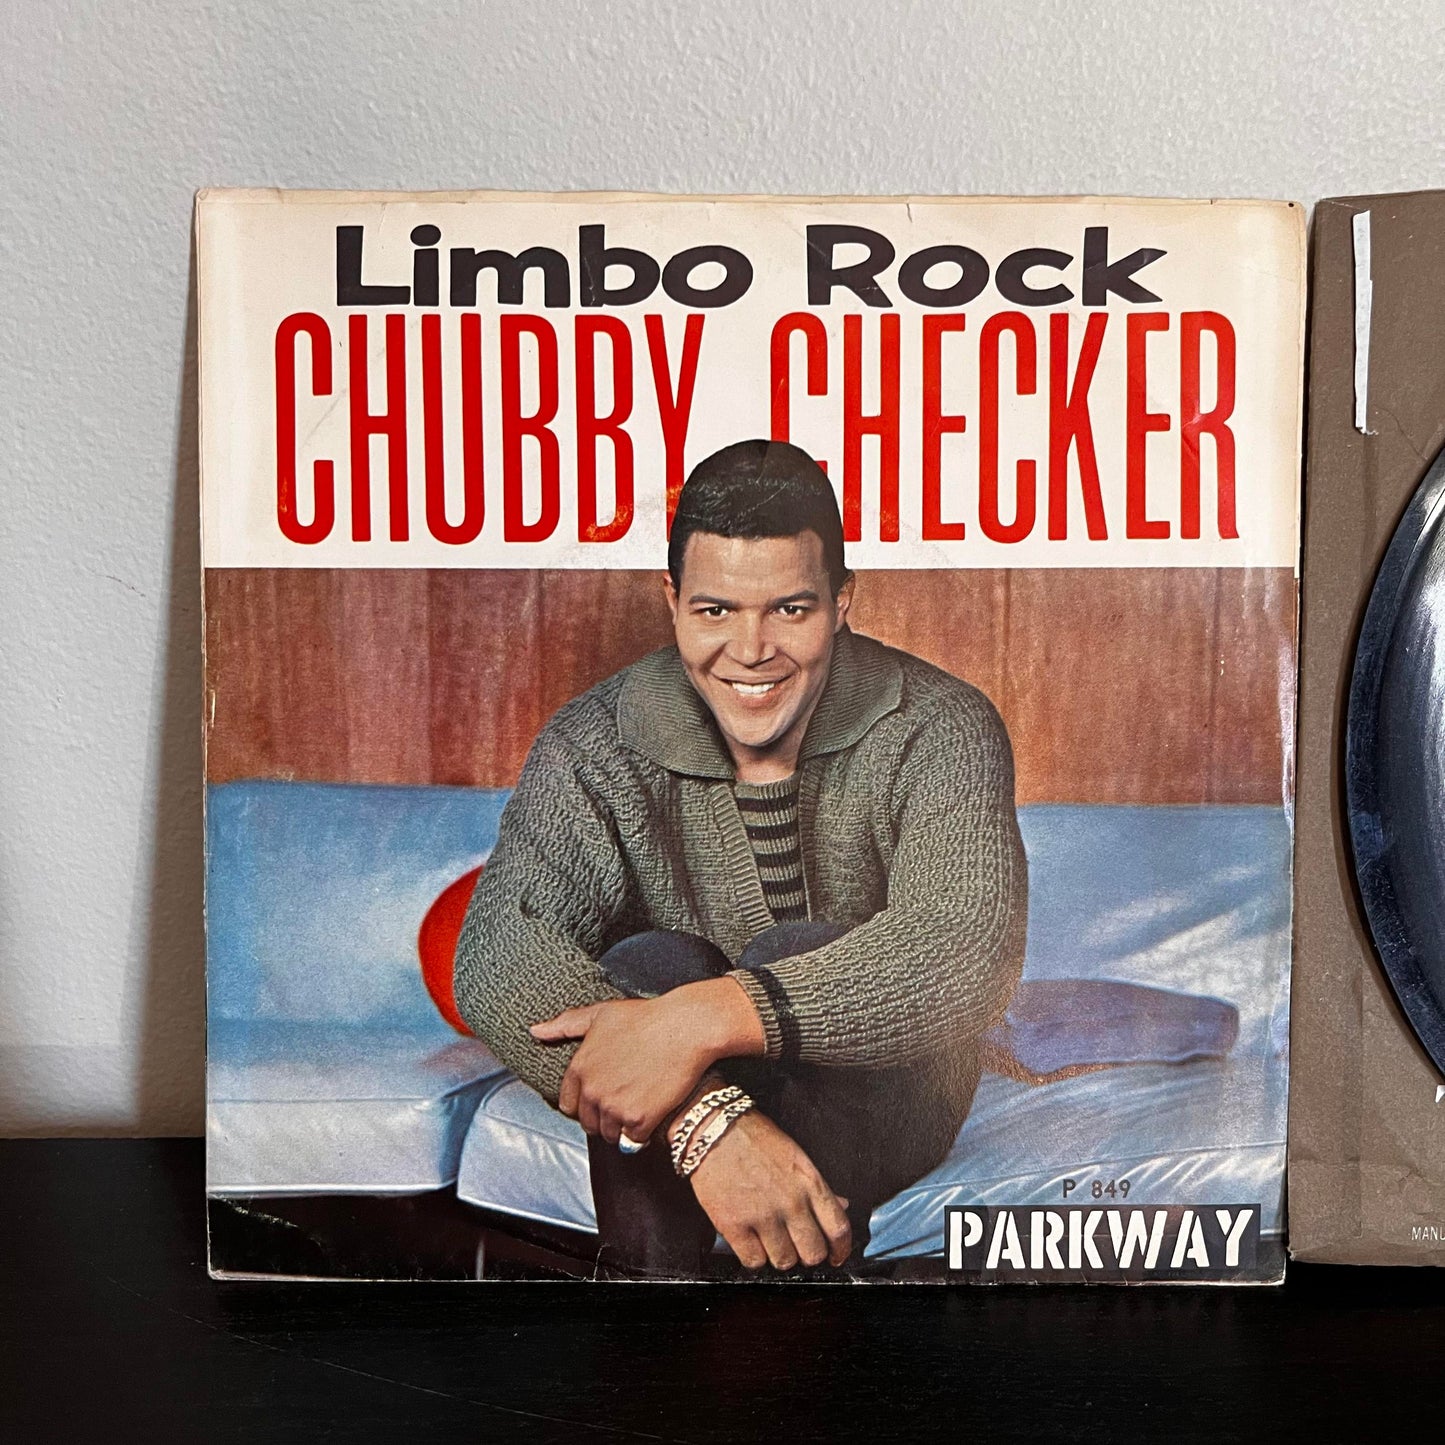 Chubby Checker "Limbo Rock"/"Popeye" 45 RPM Parkway P 849 EX